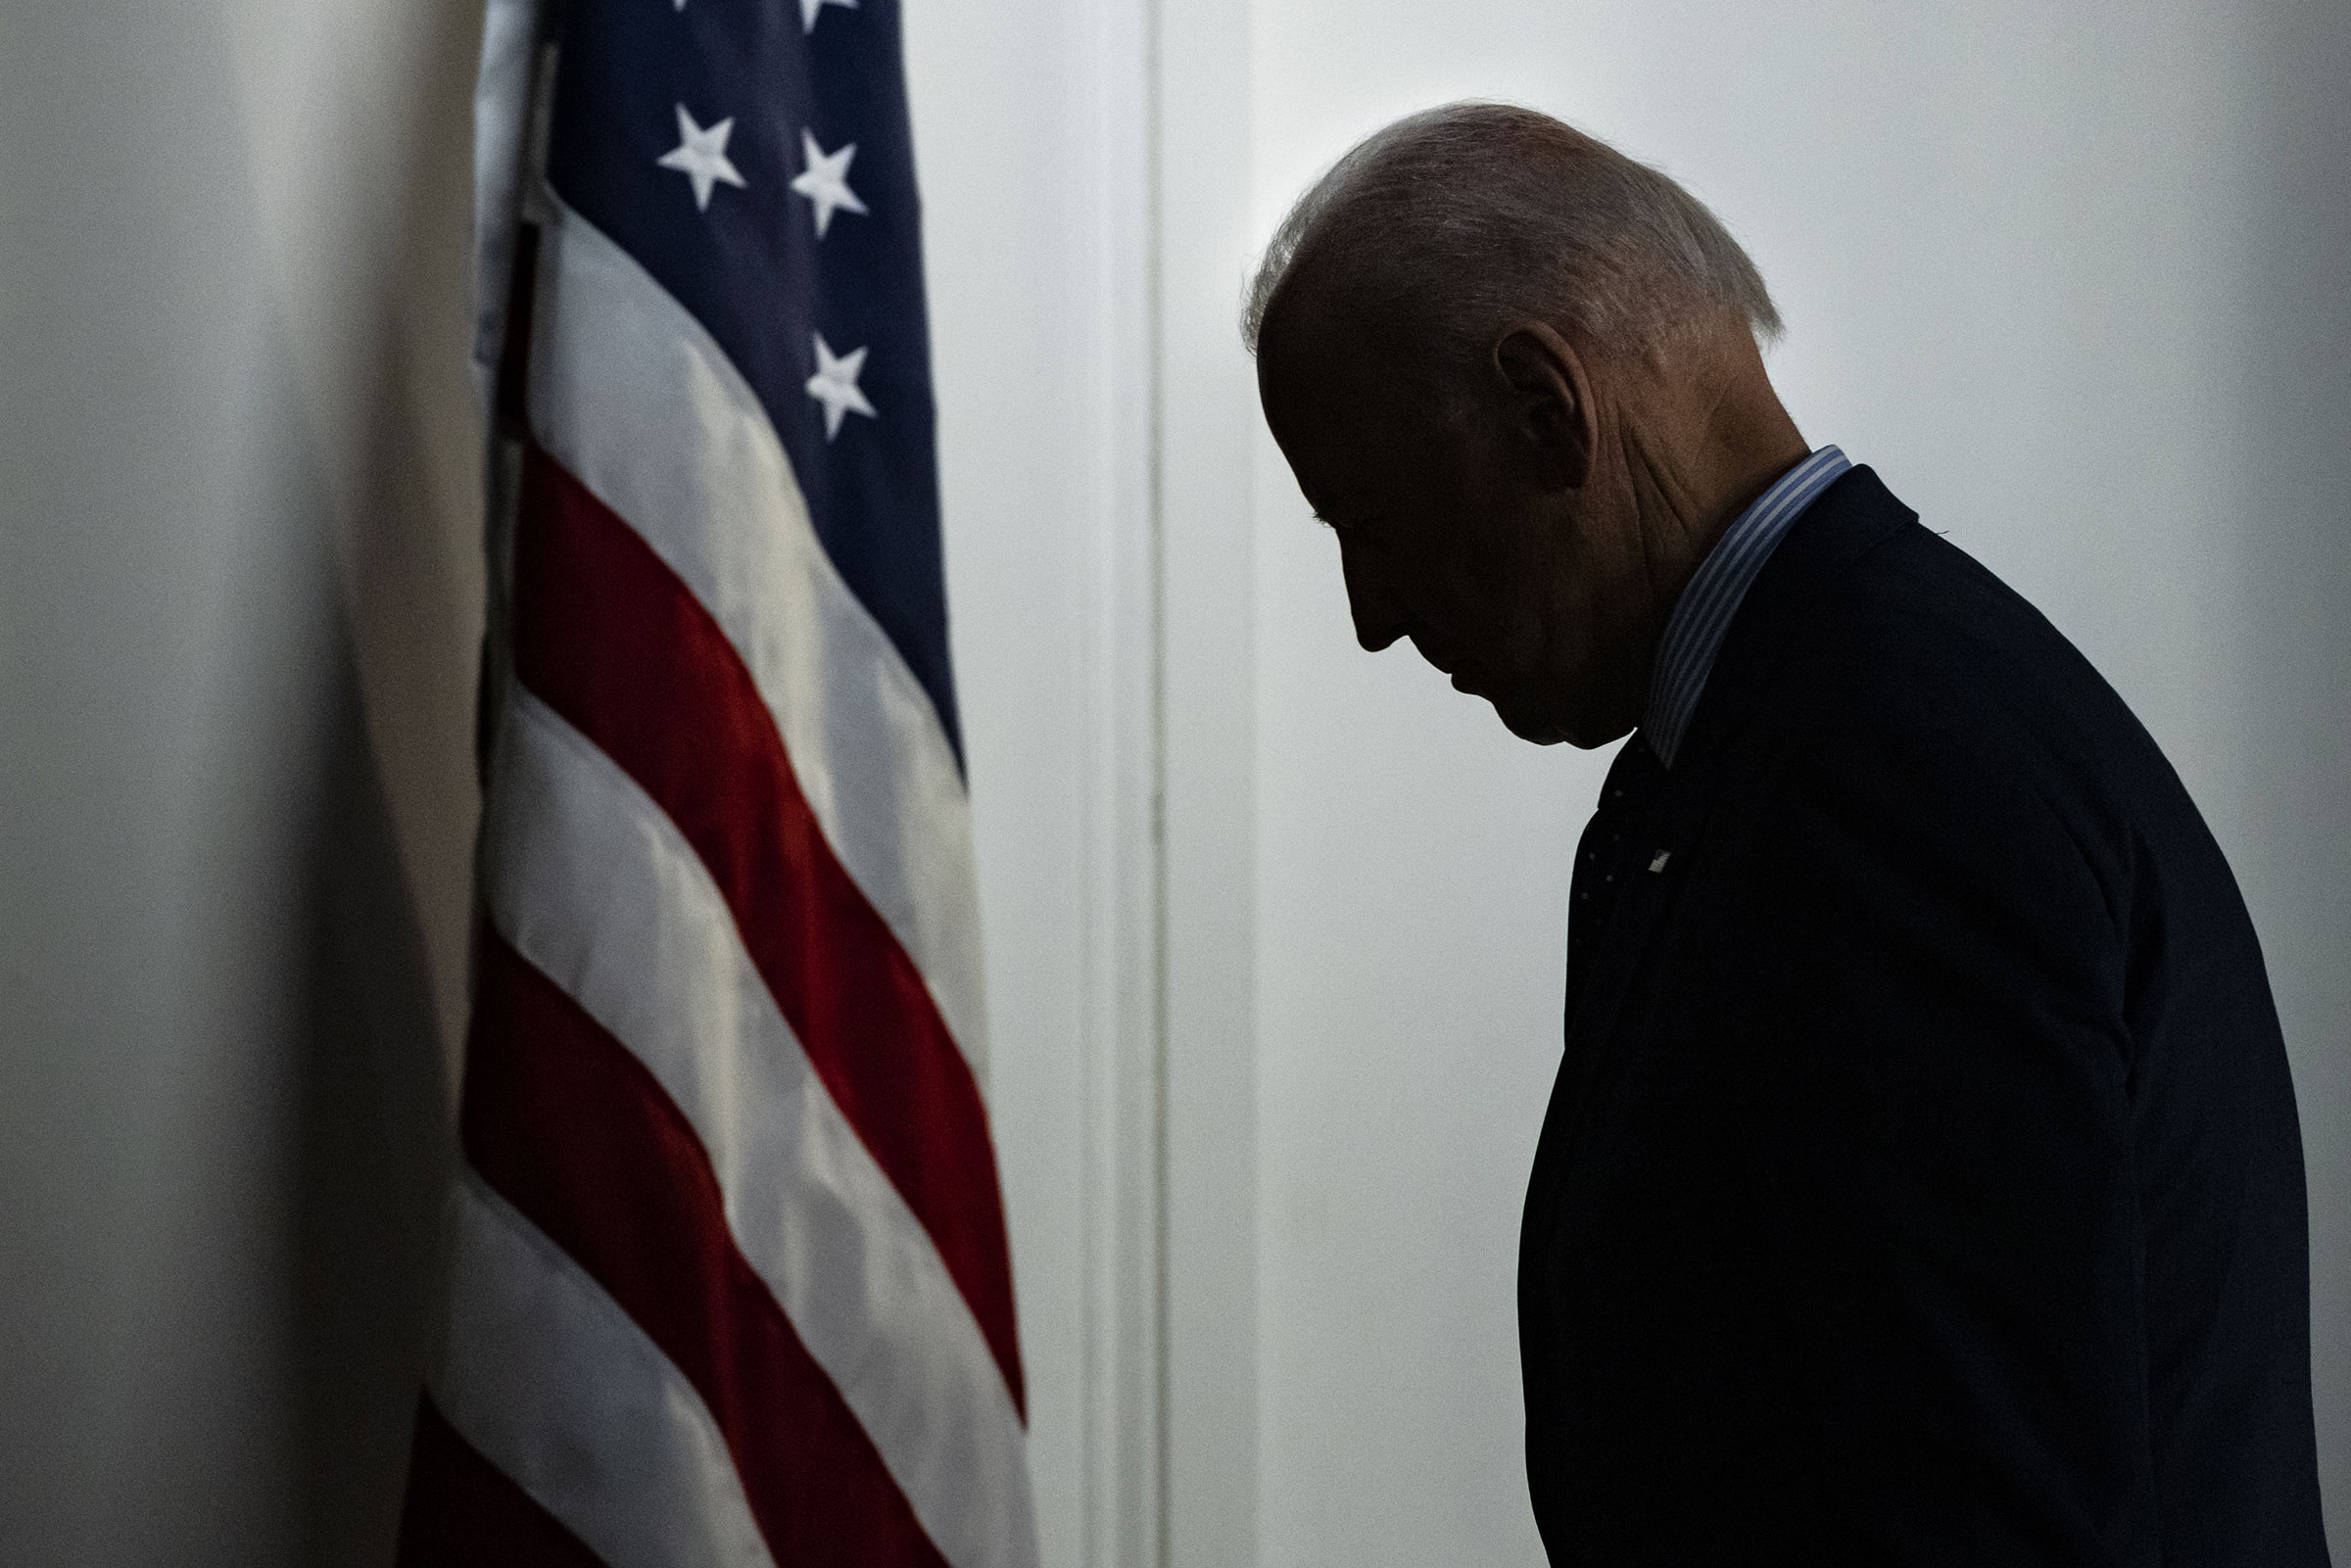 President Joe Biden departs after speaking in the Eisenhower Executive Office Building in Washington on June 2, 2021. (Samuel Corum—Bloomberg/Getty Images)